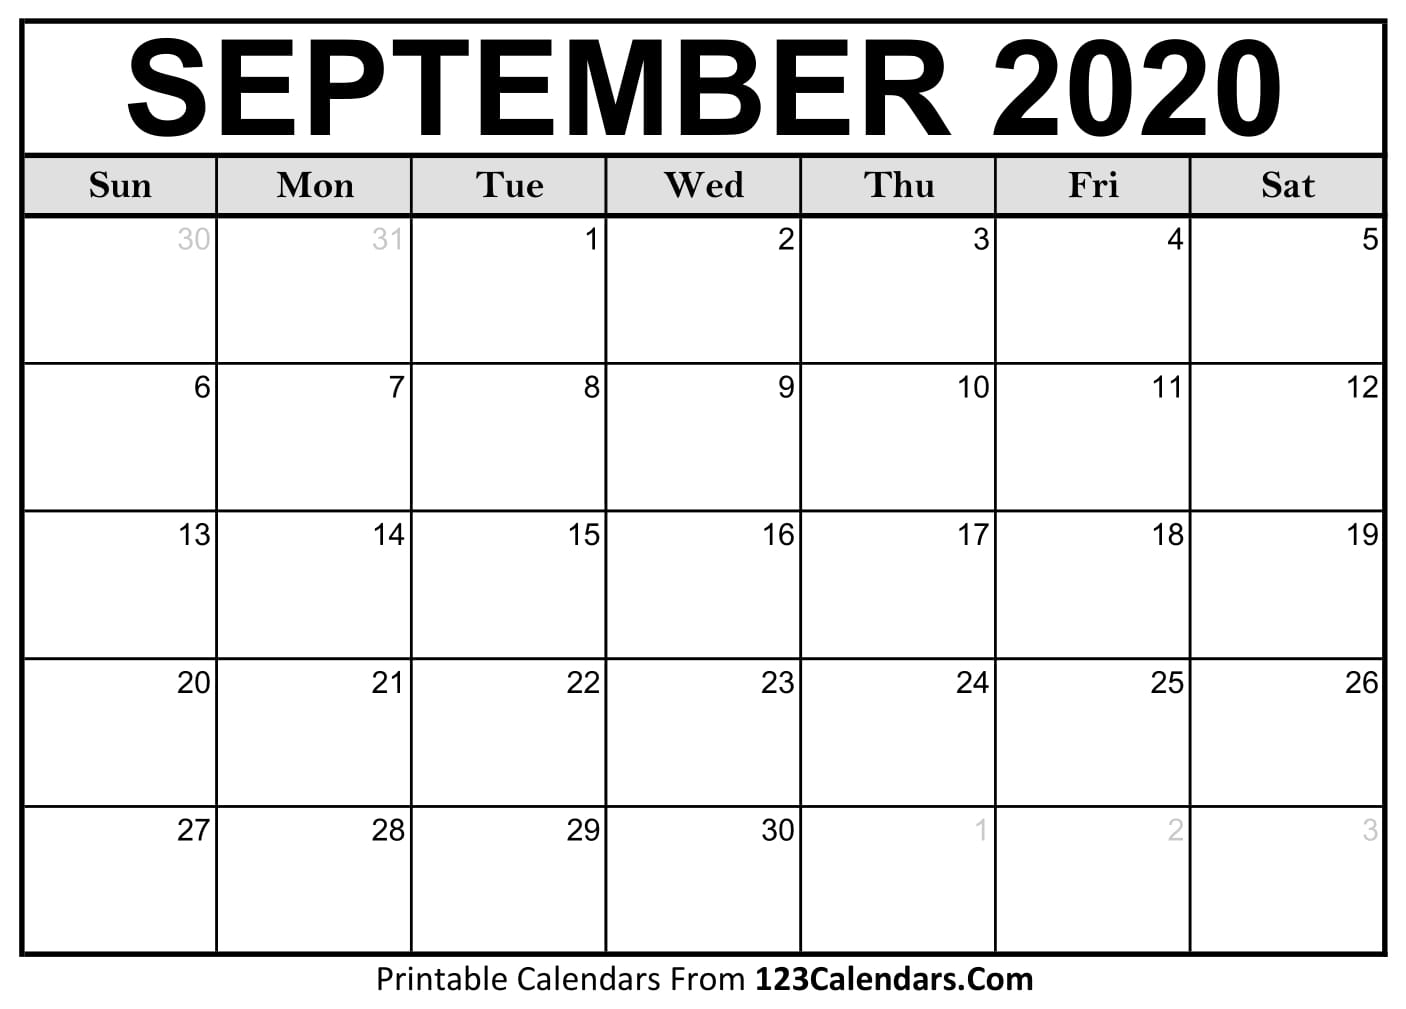 September 2020 Printable Calendar | 123Calendars